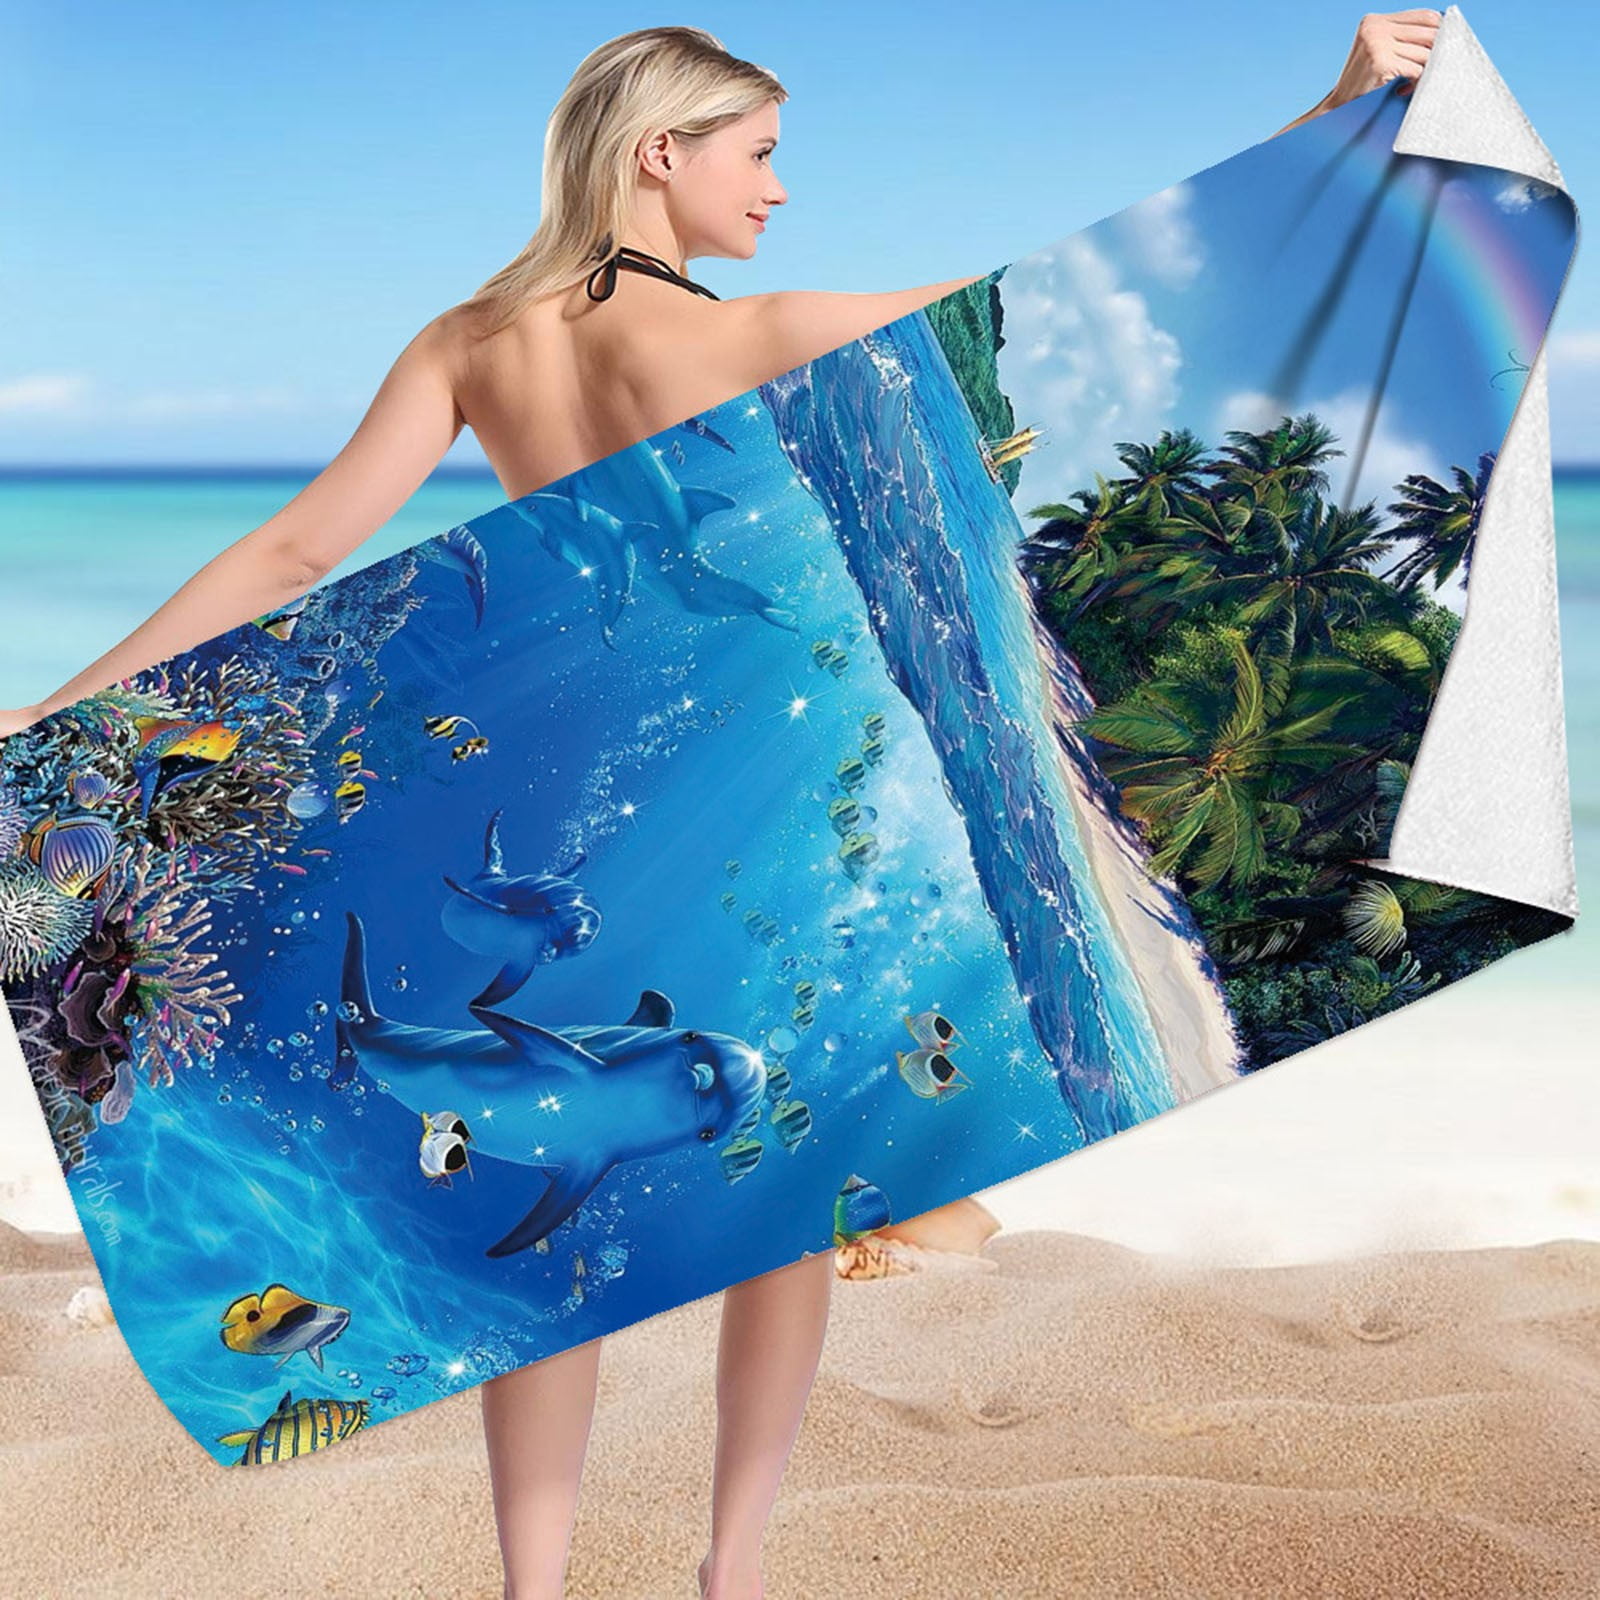 Vikakiooze Microfiber Beach Towel Super Lightweight Colorful Bath Towel  Sandproof Beach Blanket Multi-Purpose Towel For Travel Swimming Pool 30x60